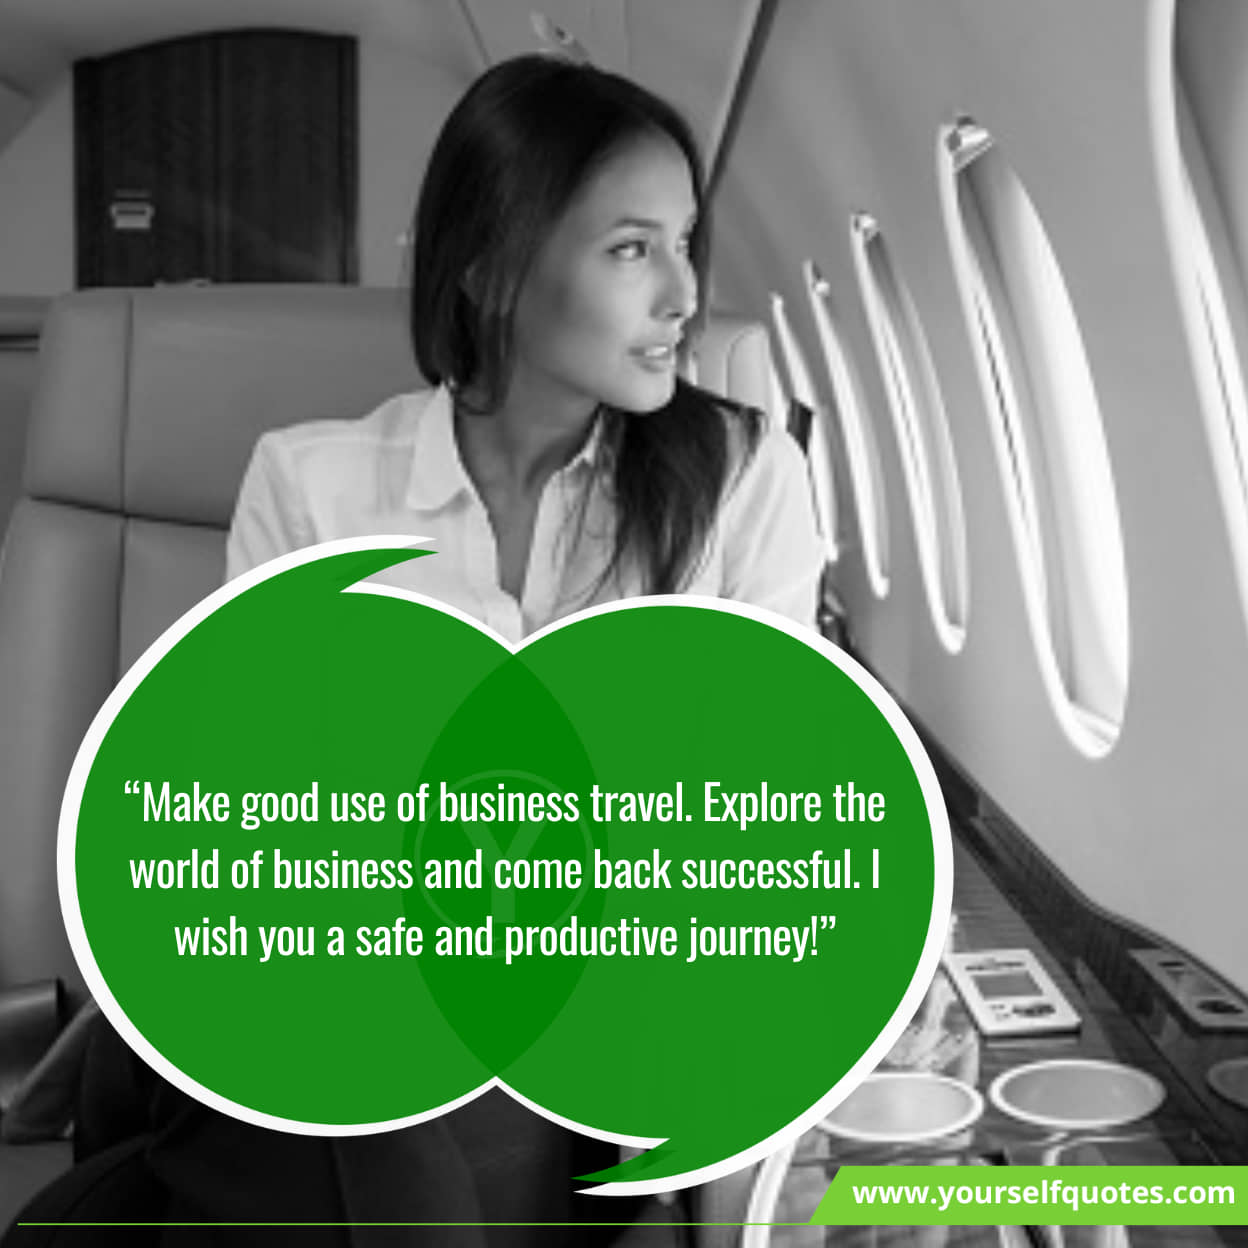 Best Business Trip Quotes Messages